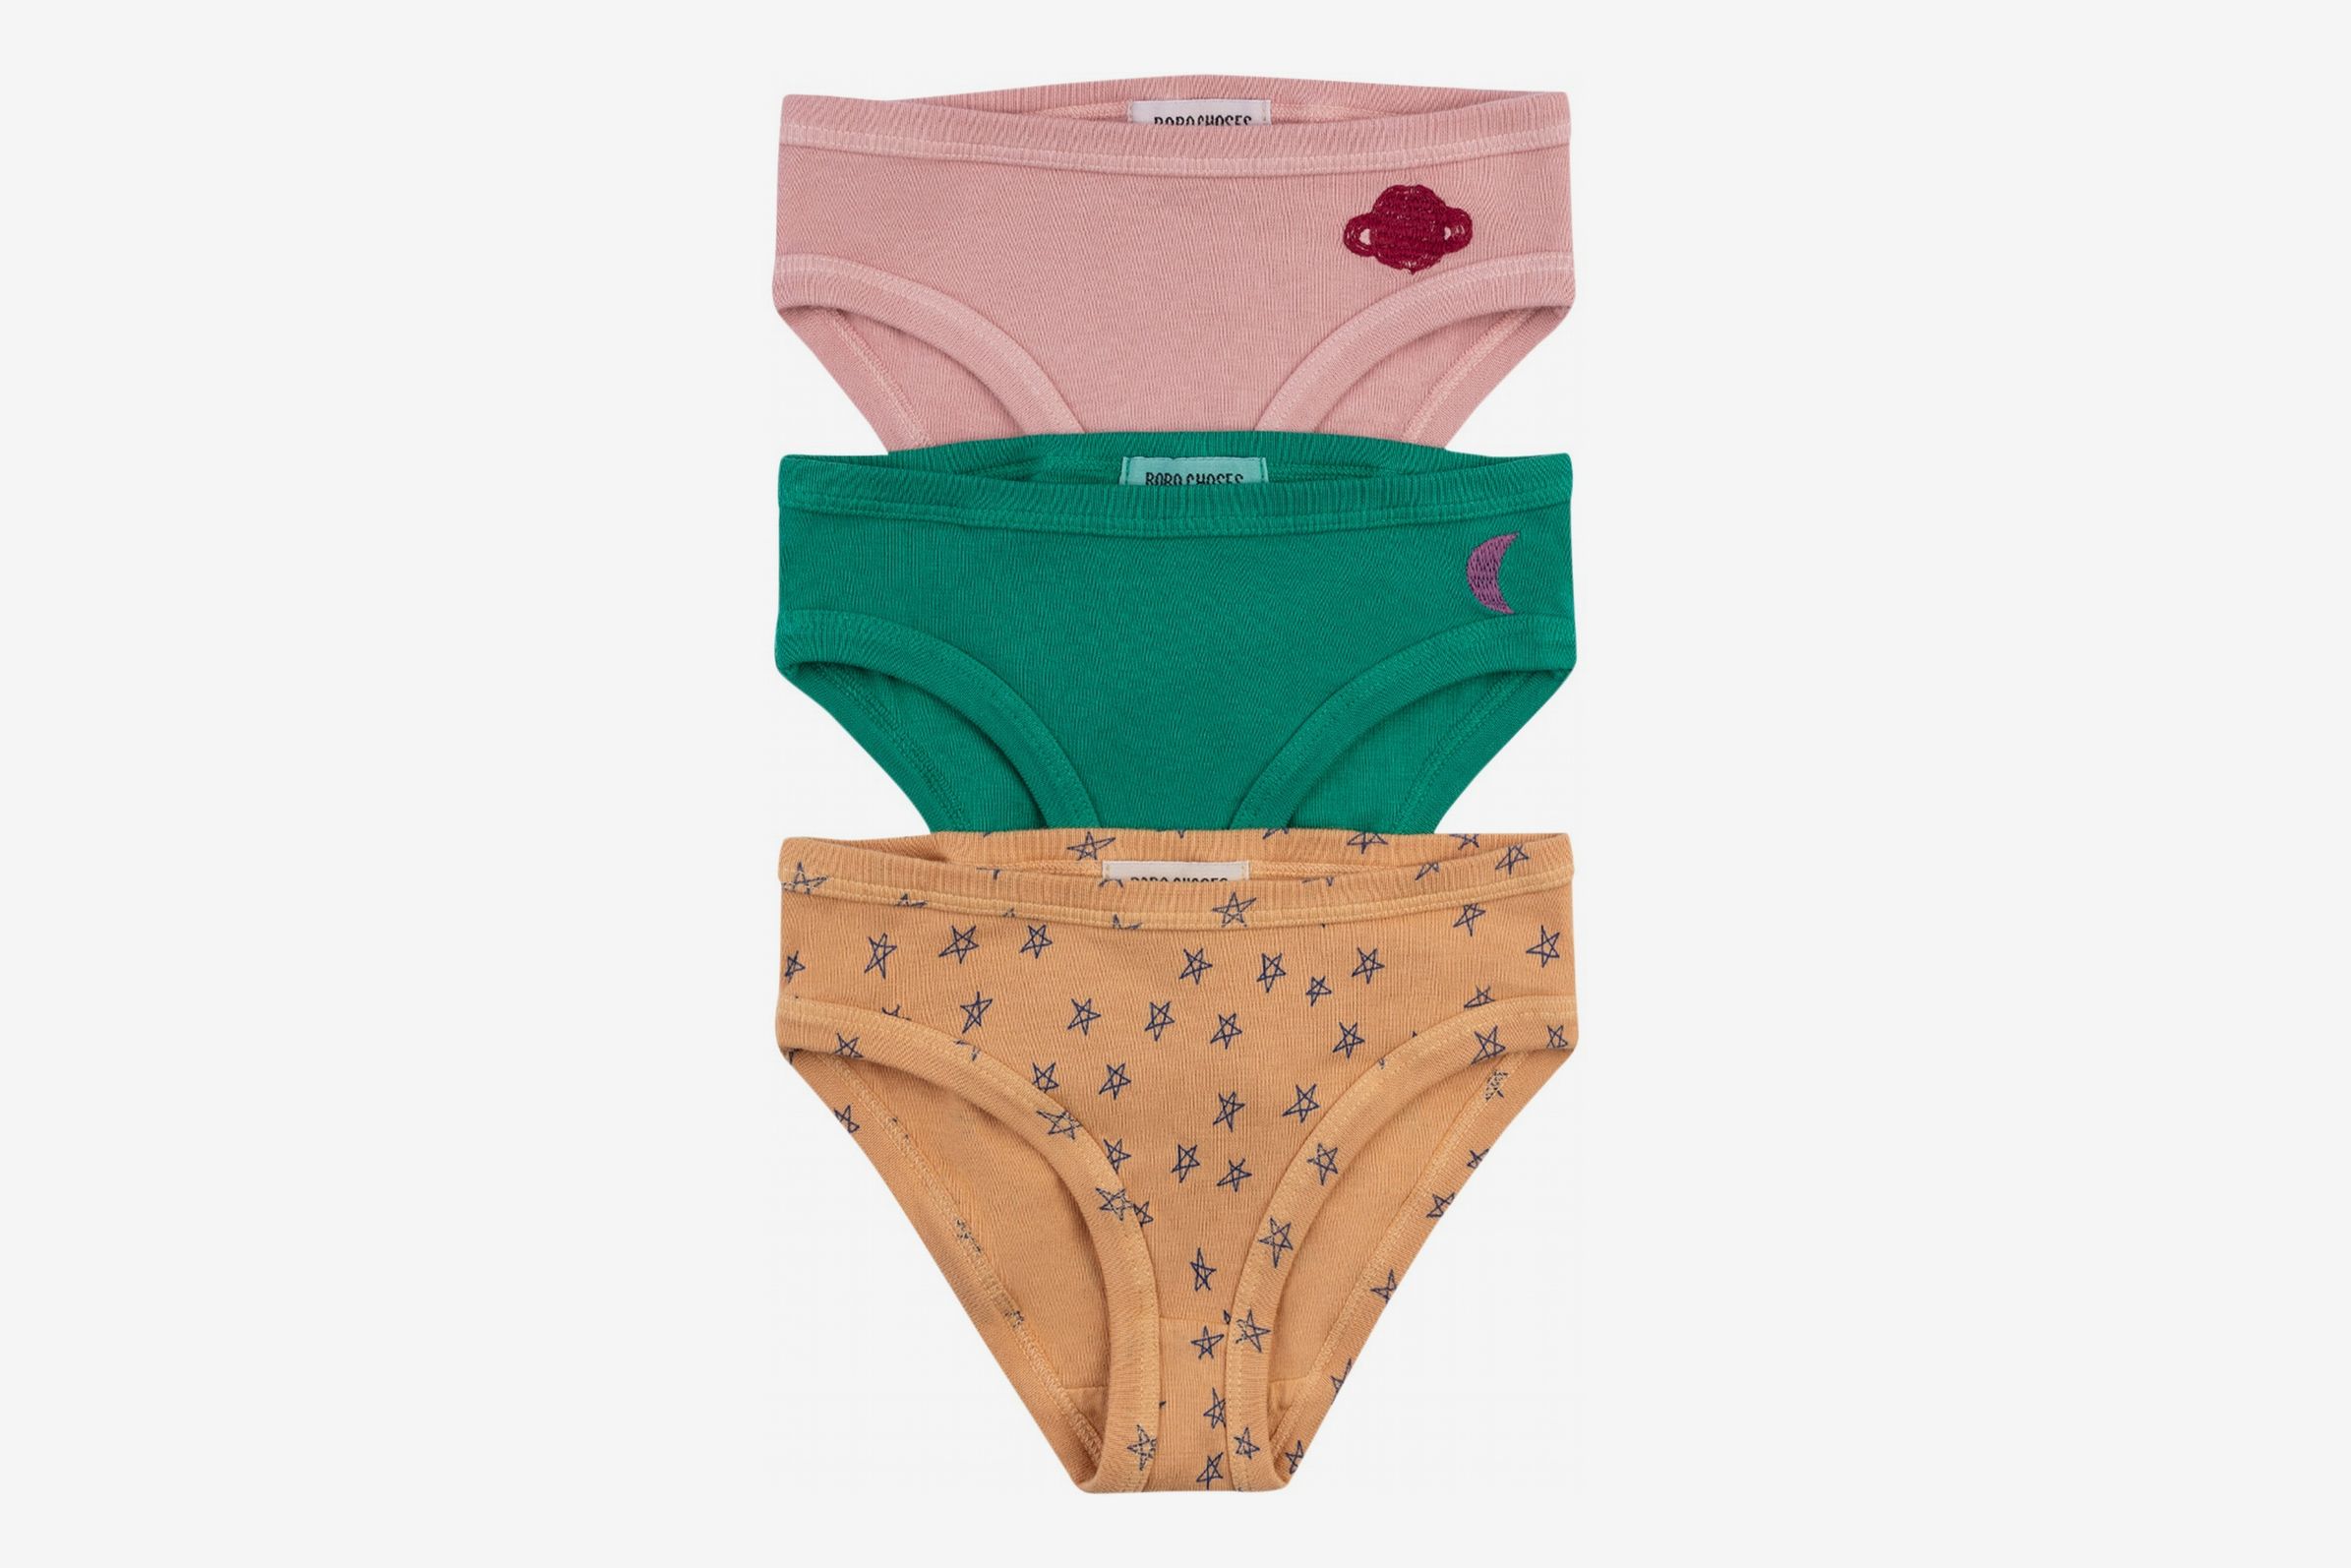 Gyratedream Girls Knickers 5 Pack Baby Bloomers Cotton Underwear Briefs Kids Cartoon Printed Panties 0-4 Years Old